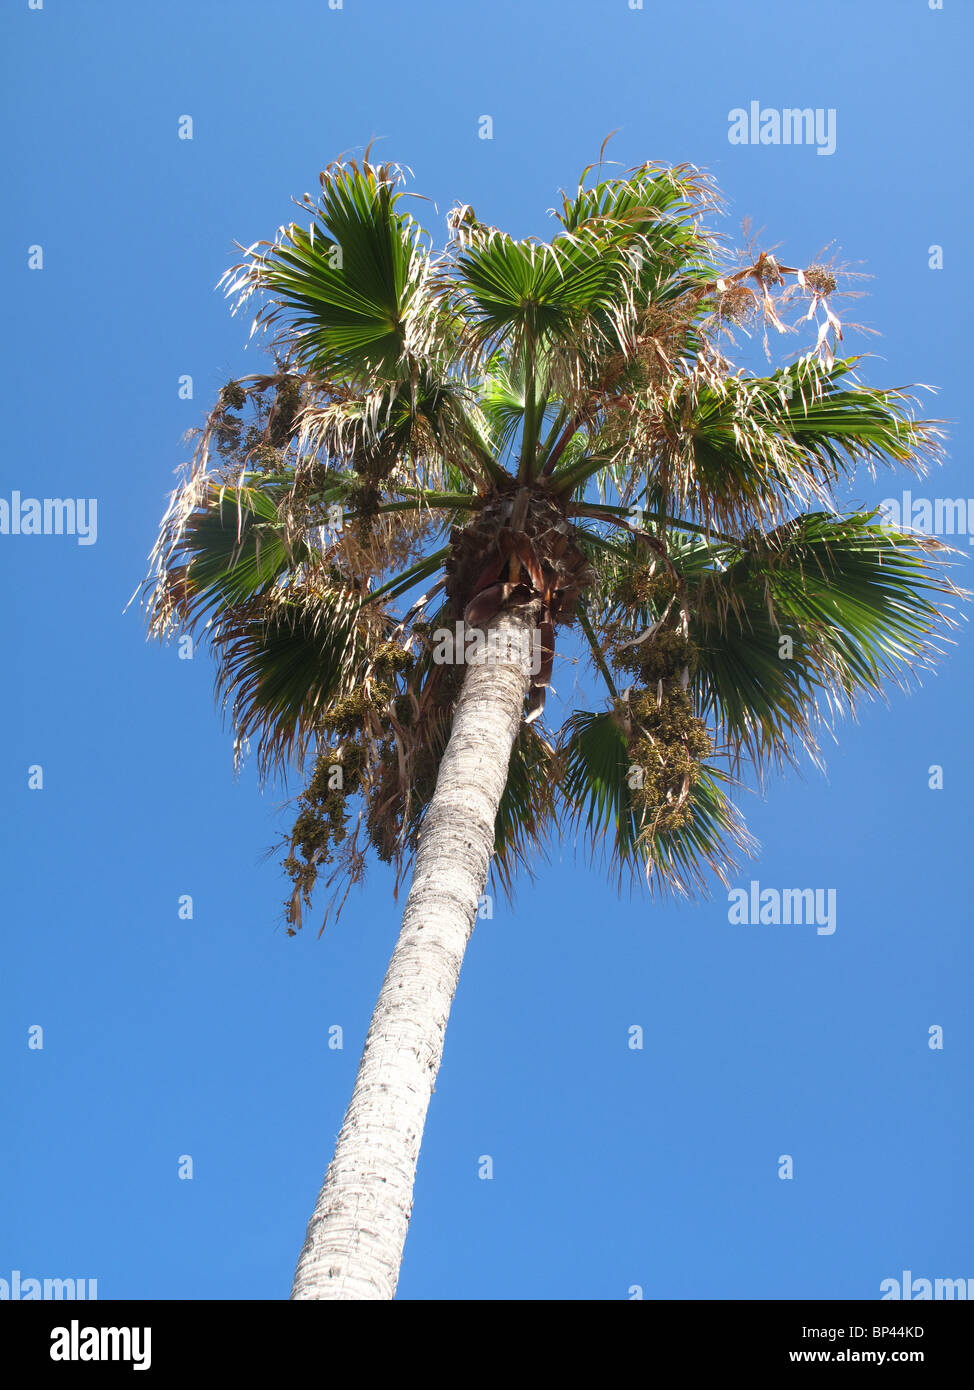 Palm tree against blue sky Stock Photo